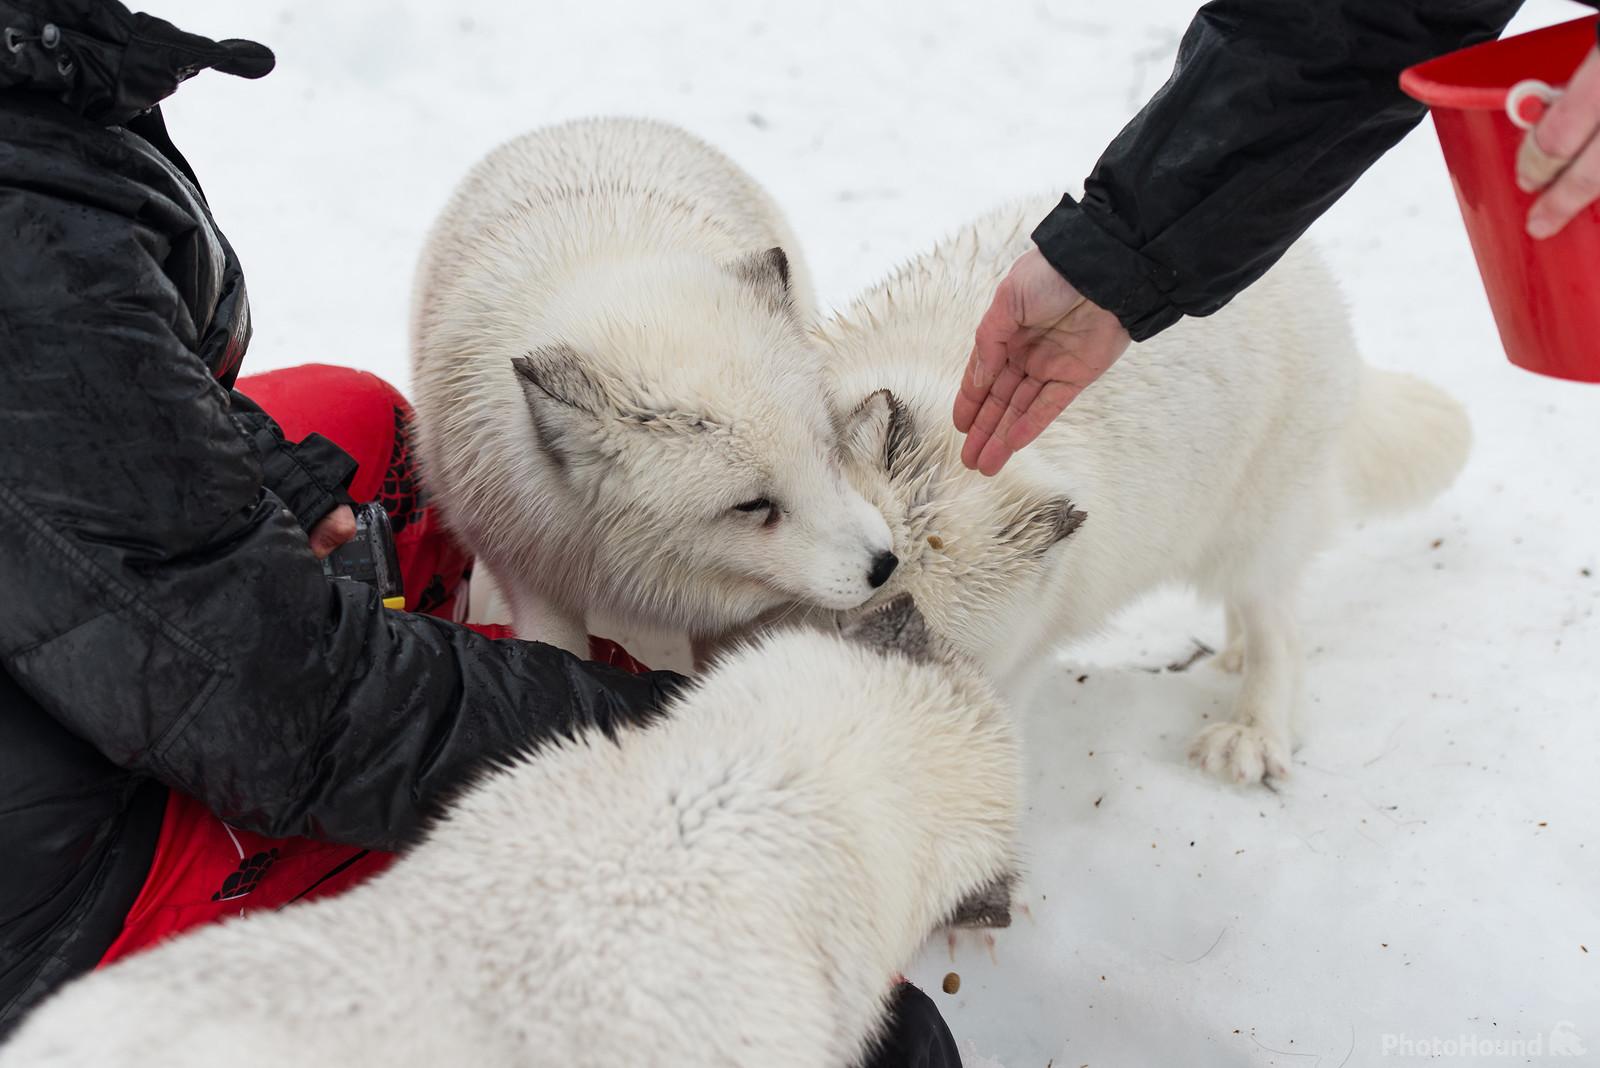 Image of Polar Park - Arctic Wildlife Centre by Luka Esenko